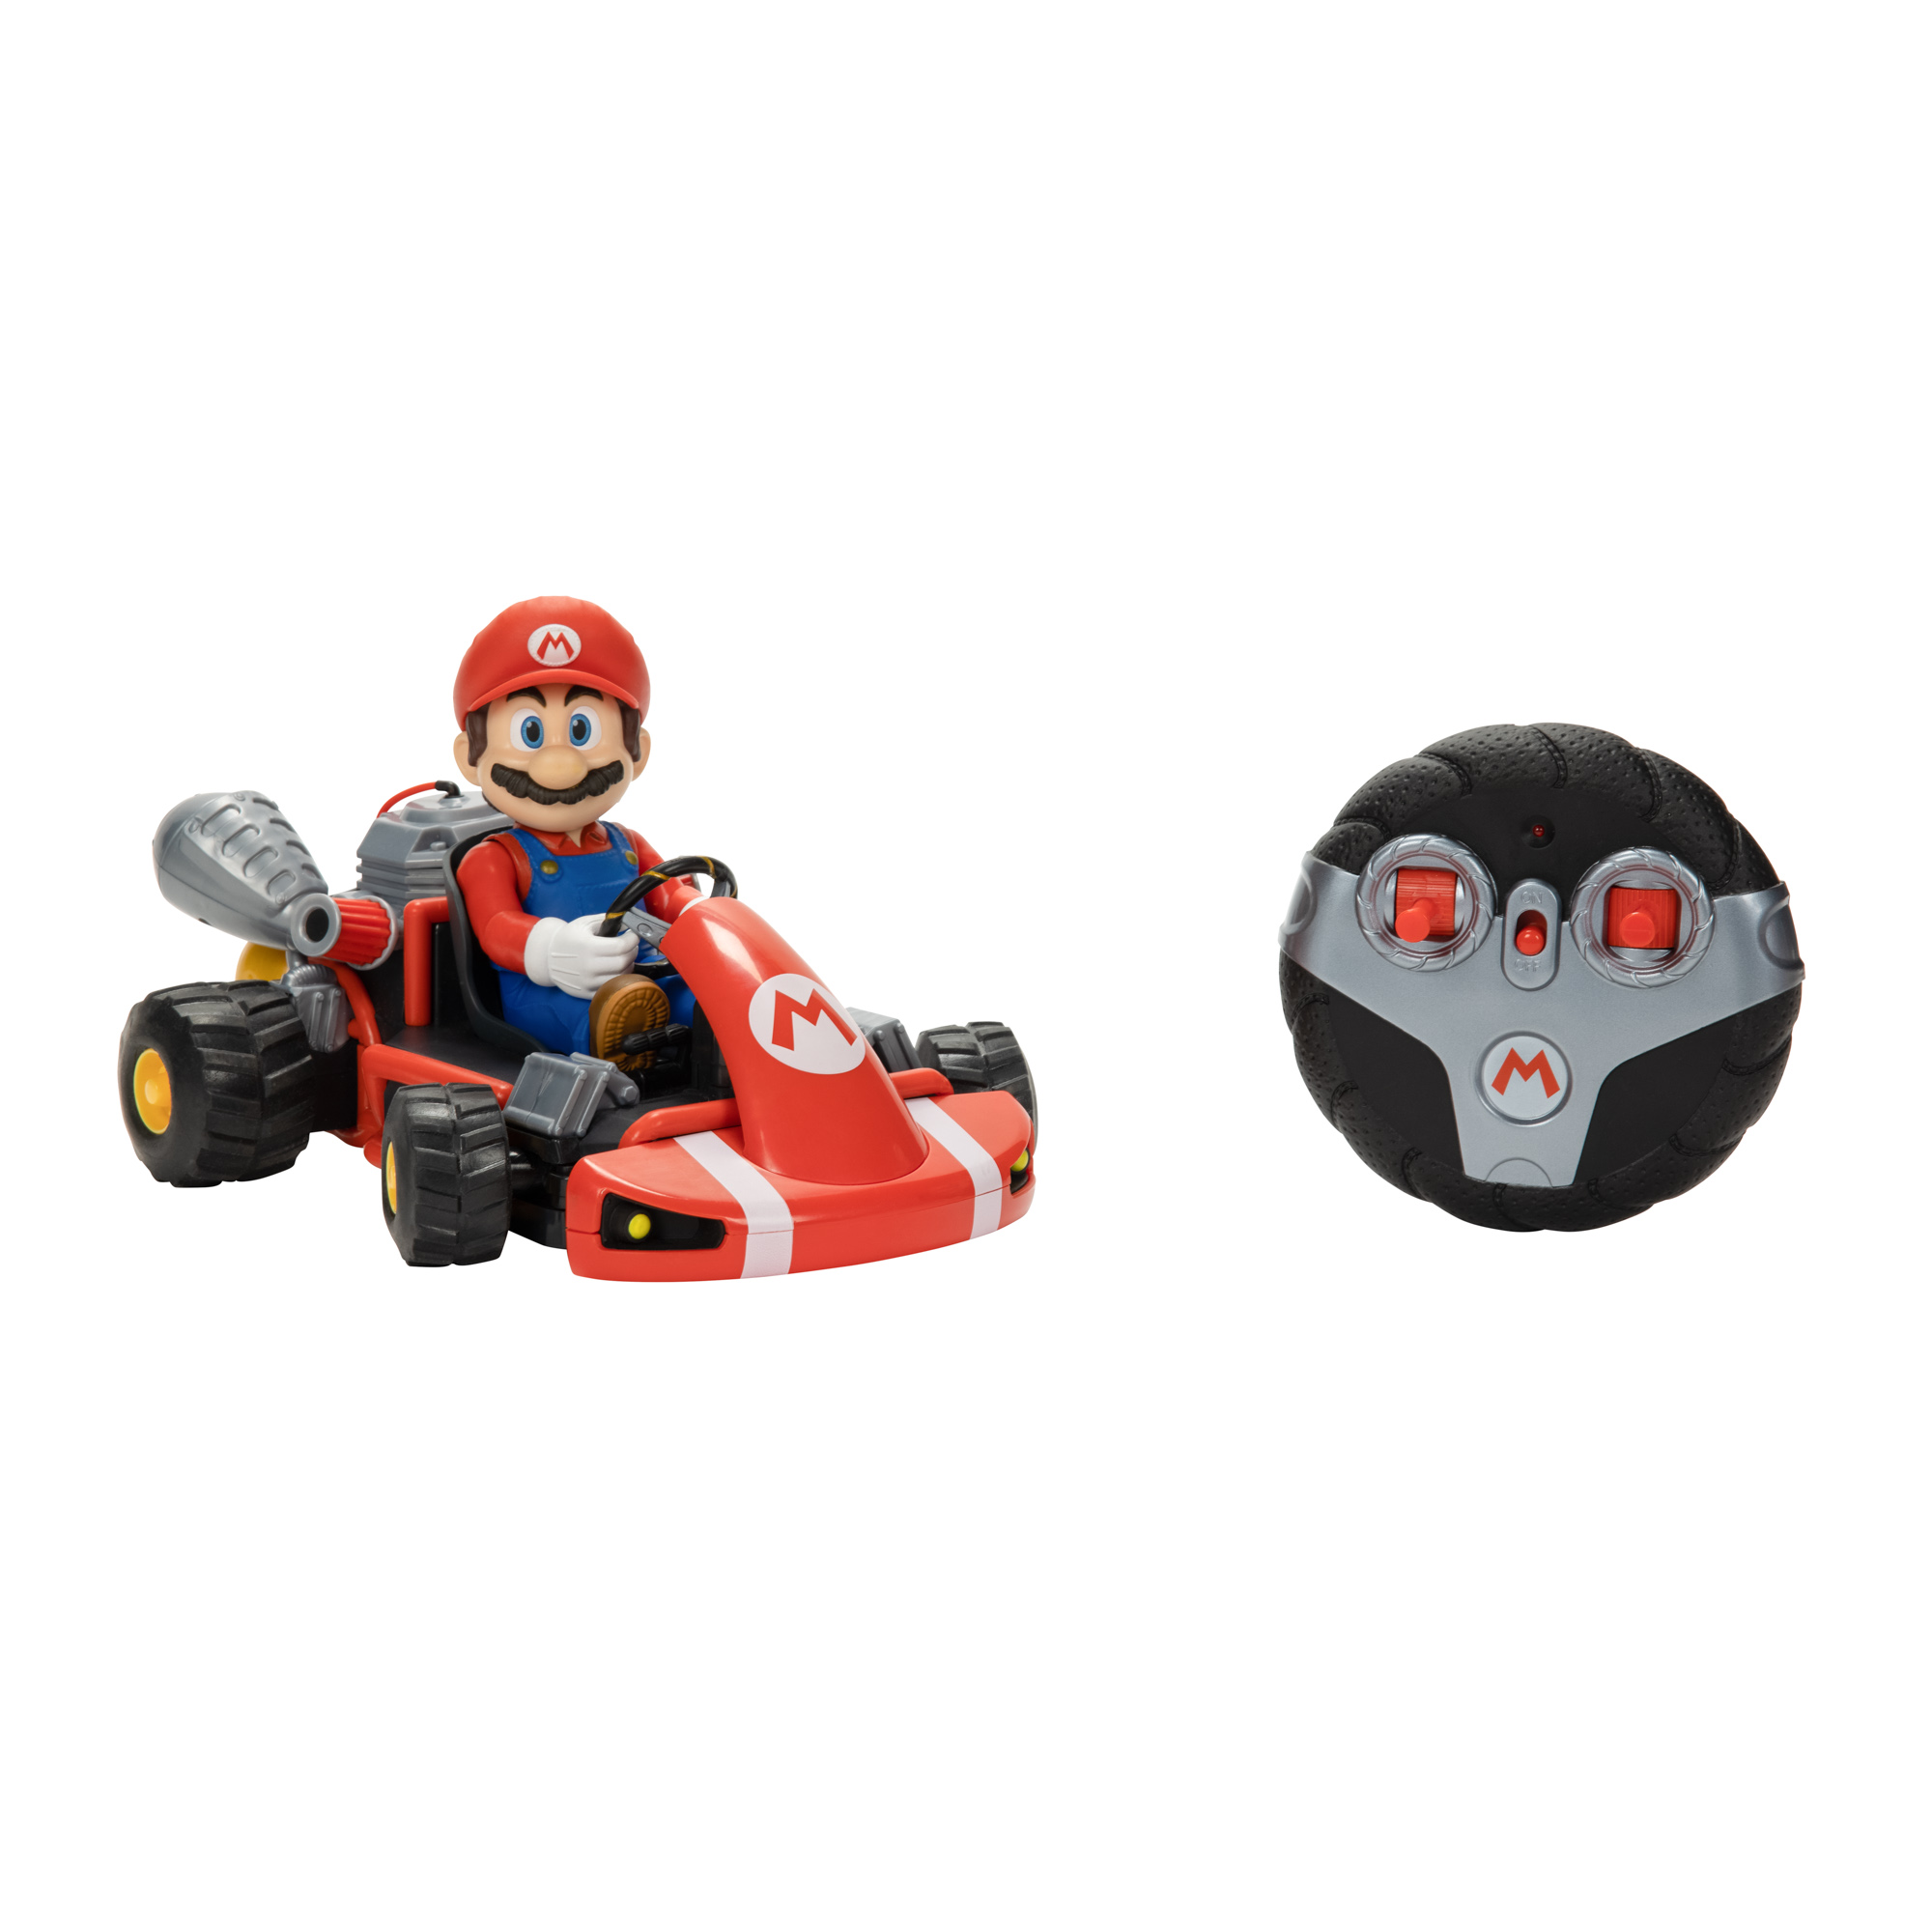 Super Mario Kart Nintendo Racer Collection Model Toys Figure 